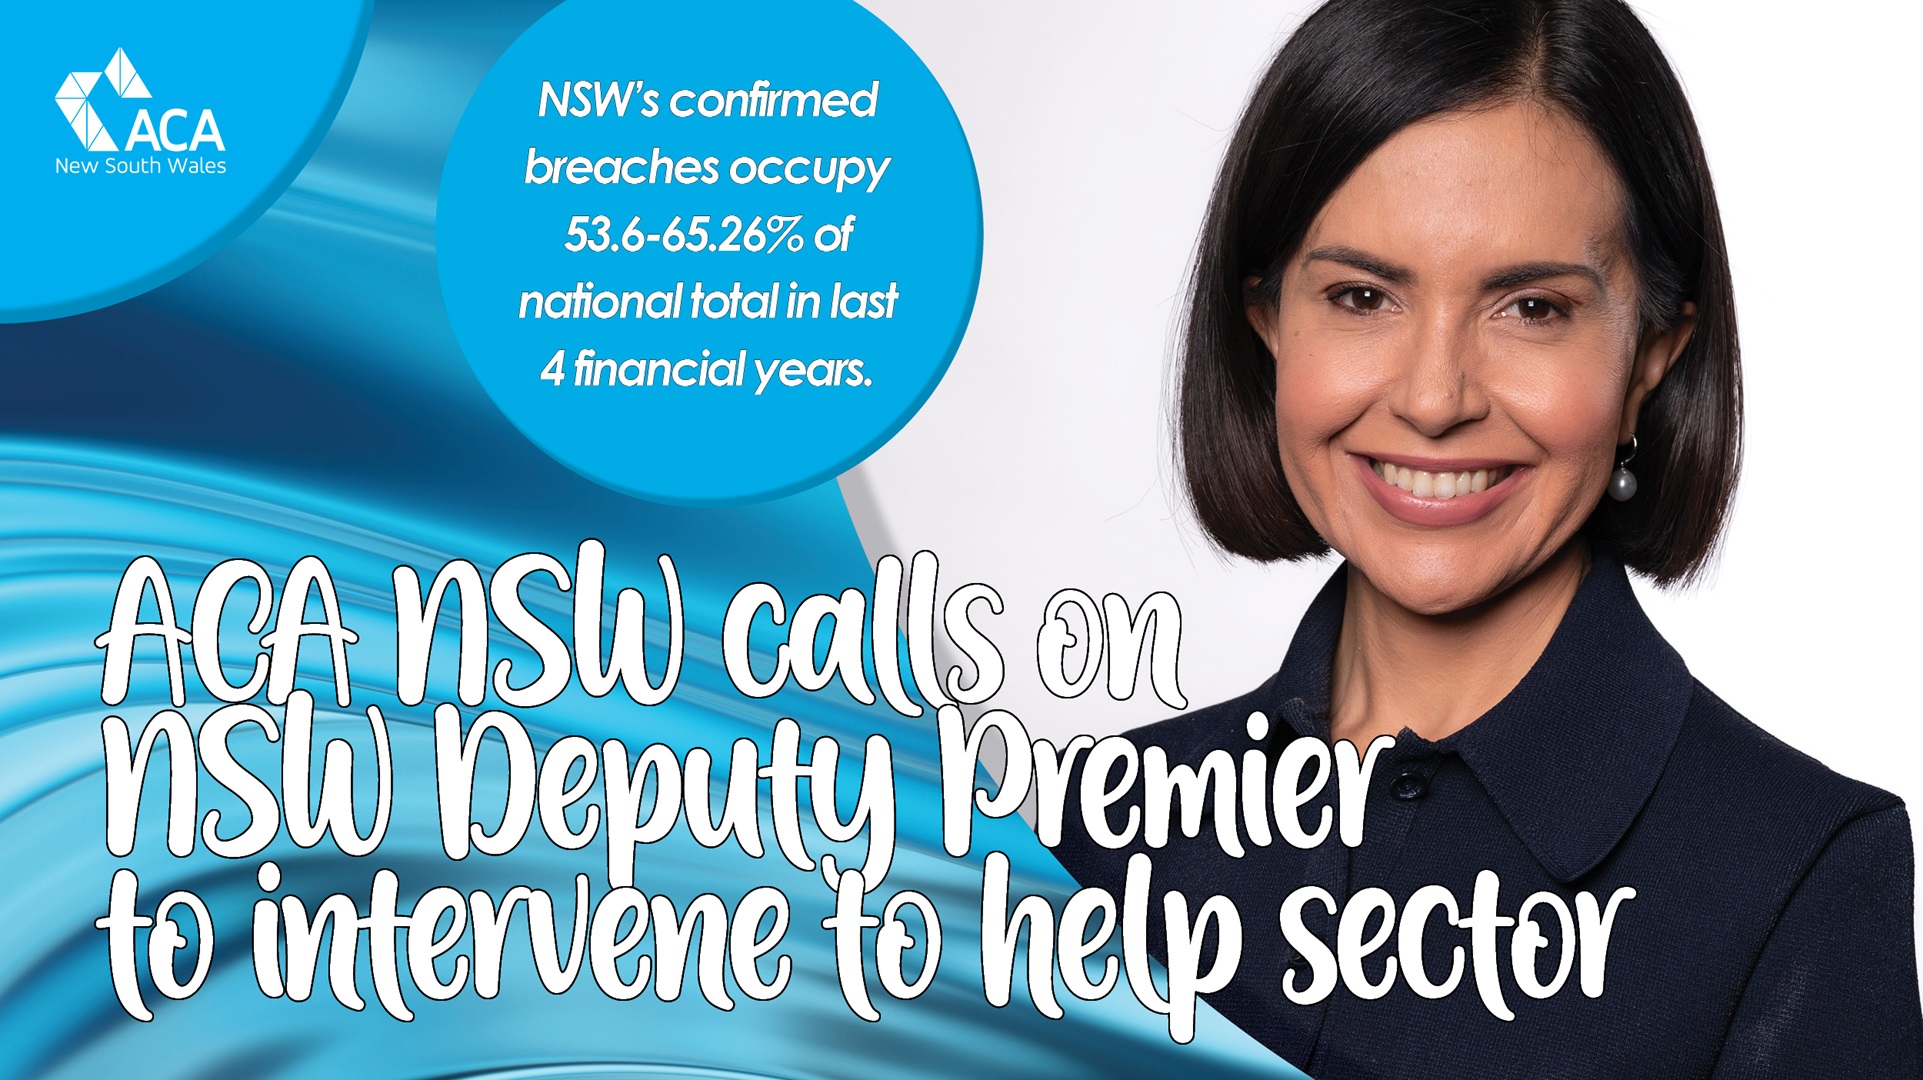 ACA NSW calls on NSW Deputy Premier to intervene to help sector